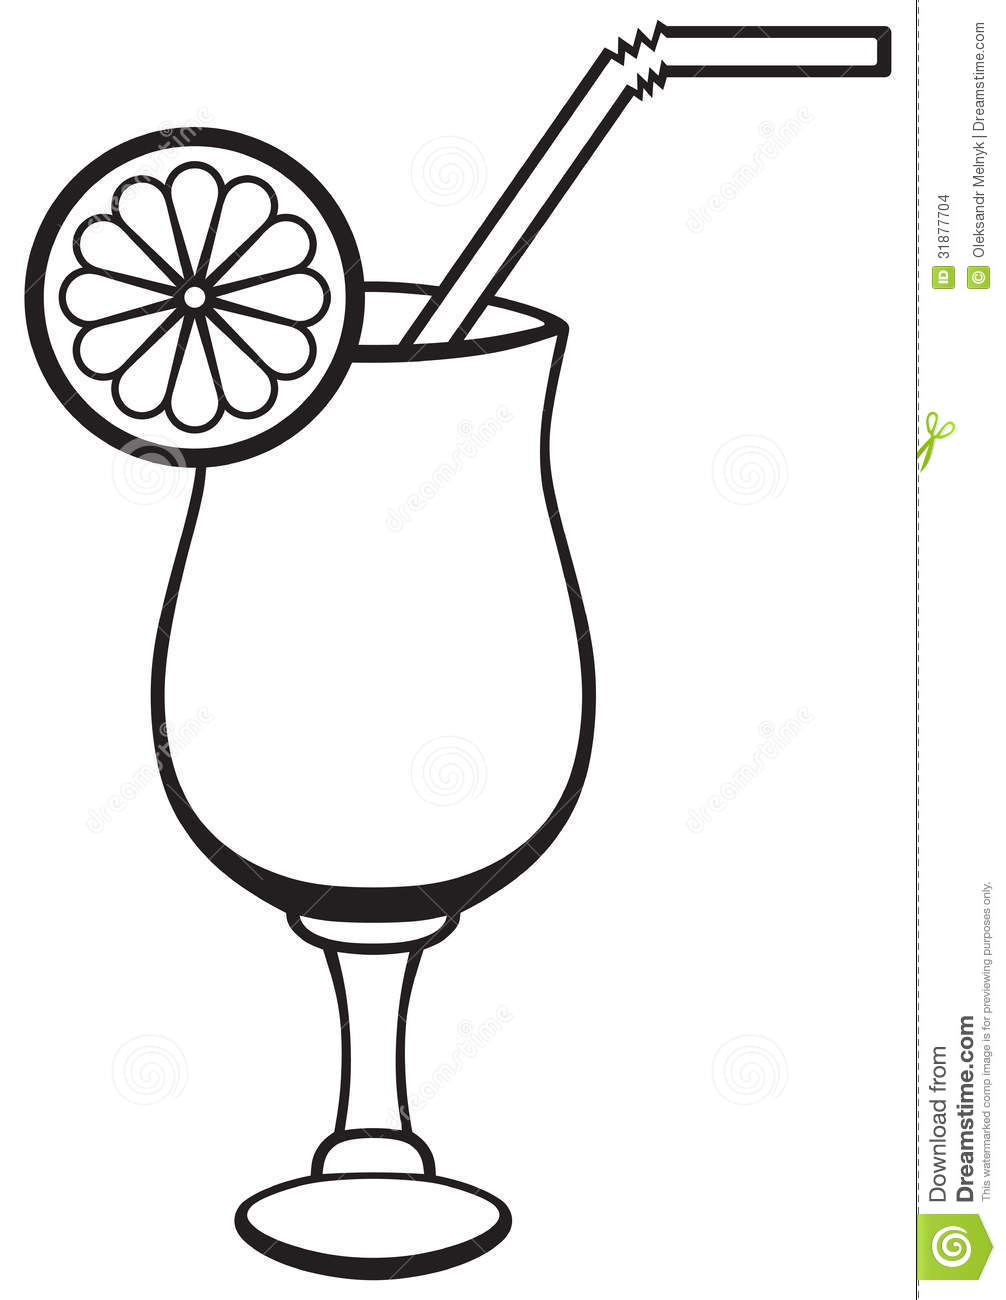 Martini glass drawing.